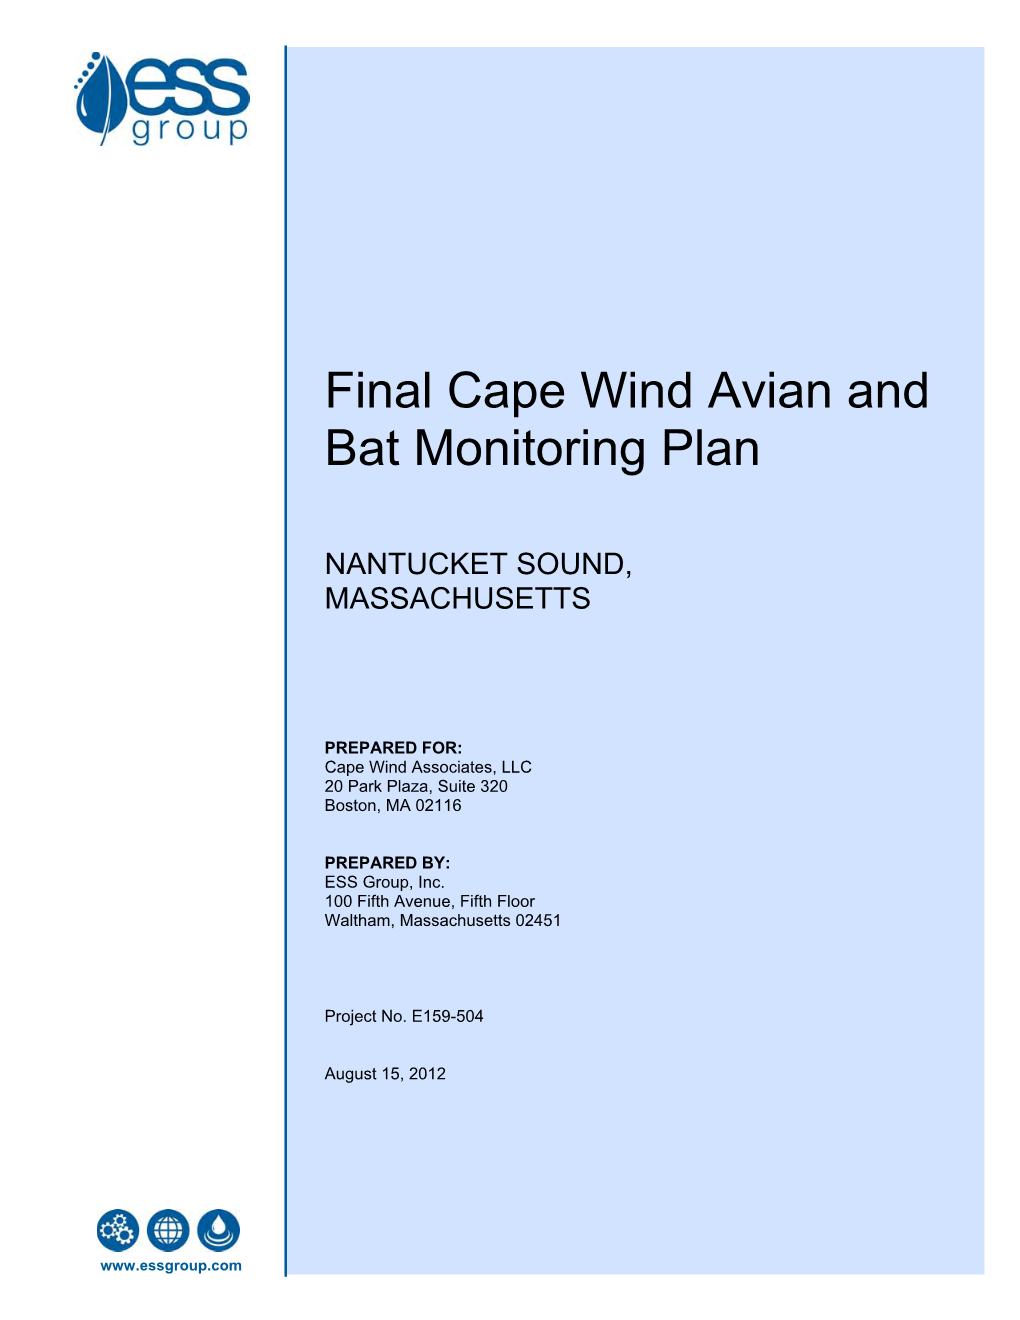 Final Cape Wind Avian and Bat Monitoring Plan